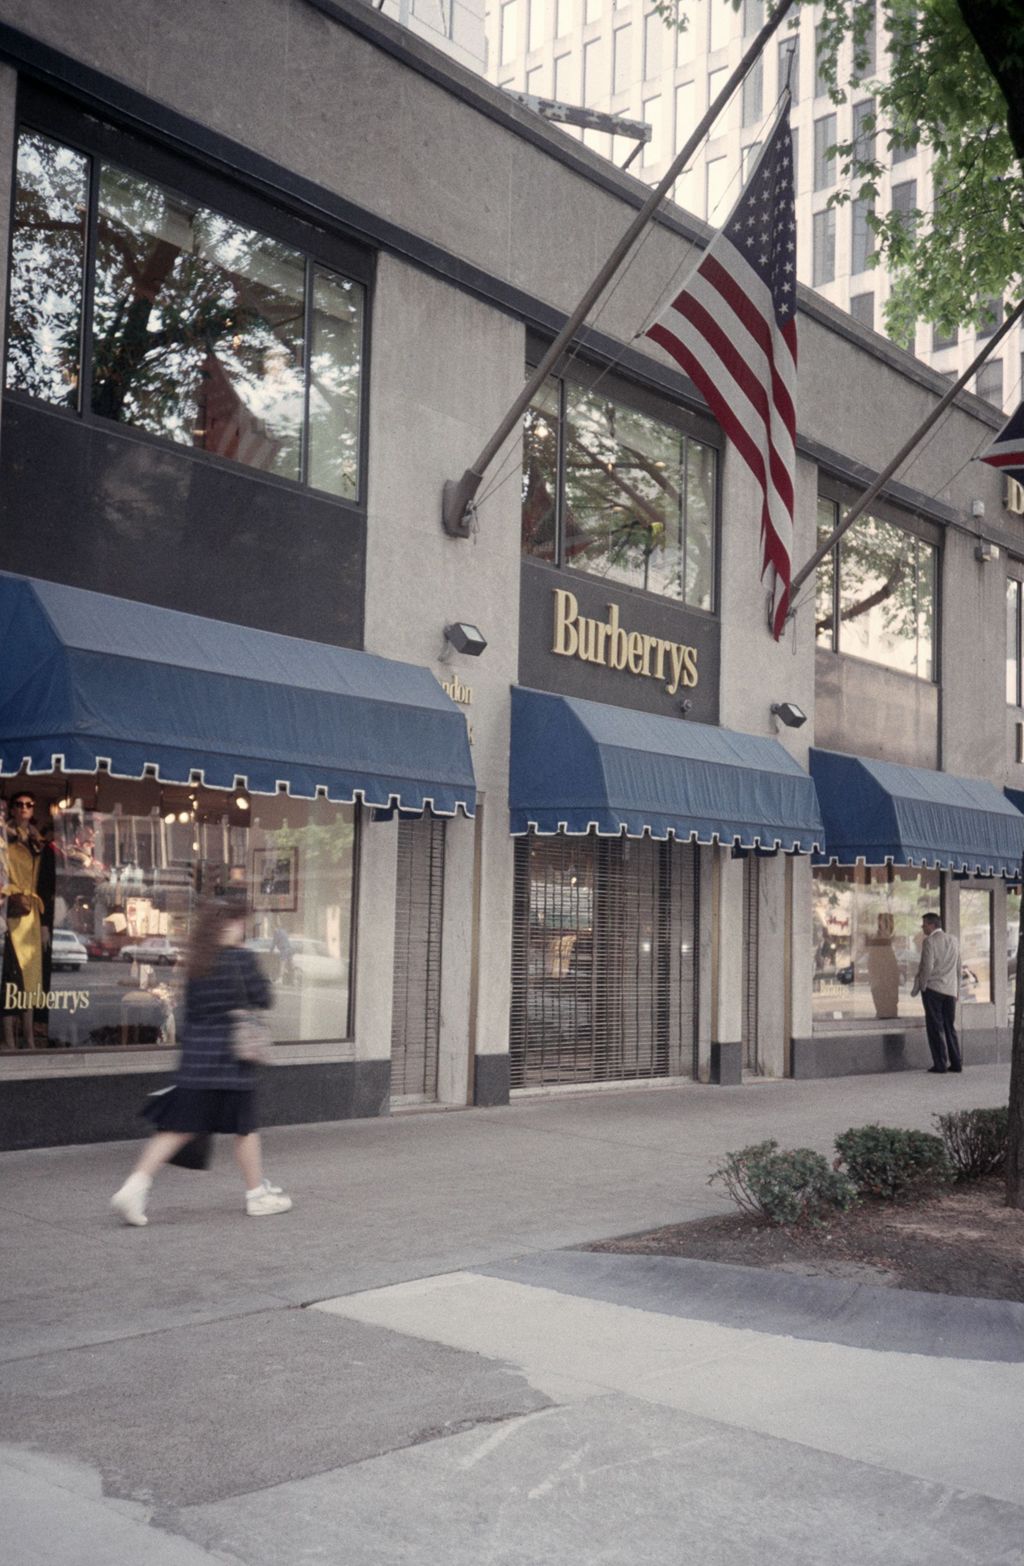 Miniature of Burberry store, North Michigan Avenue